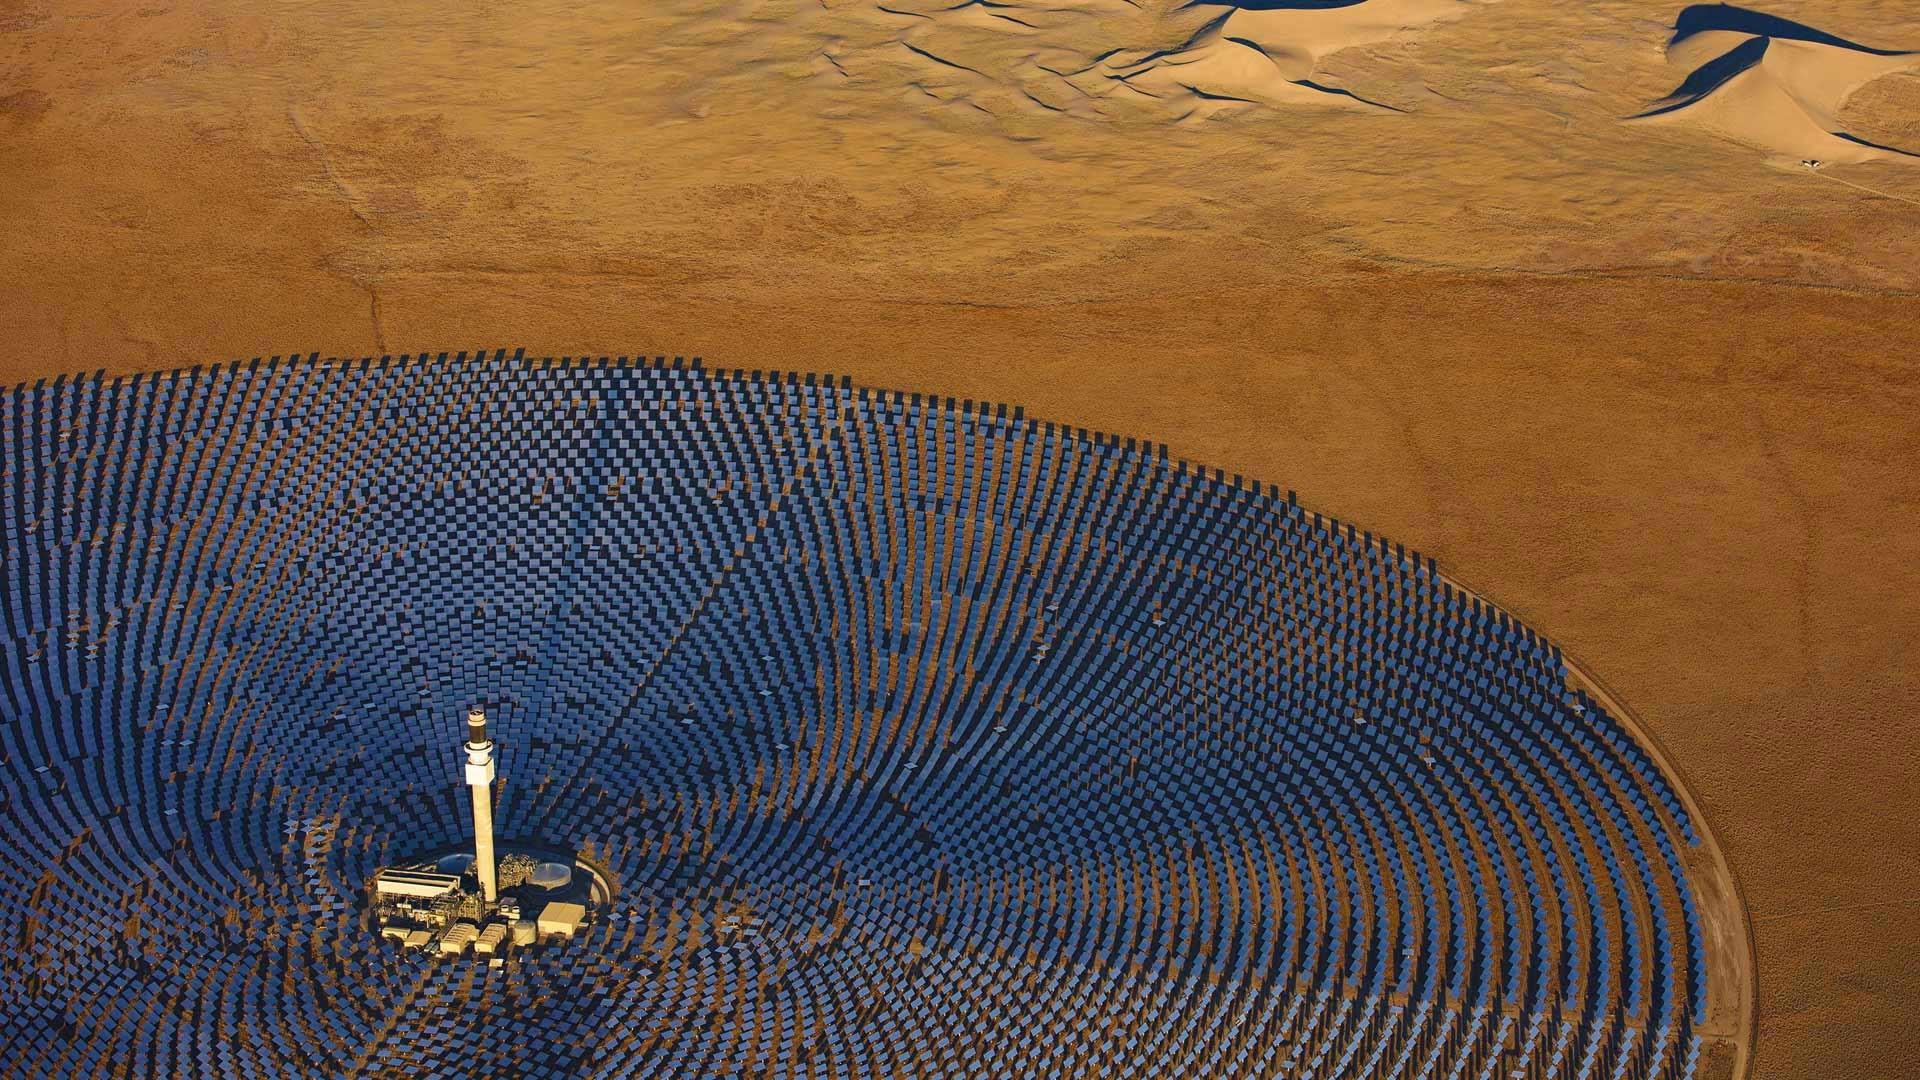 The Crescent Dunes Solar Energy Project near Tonopah, Nevada